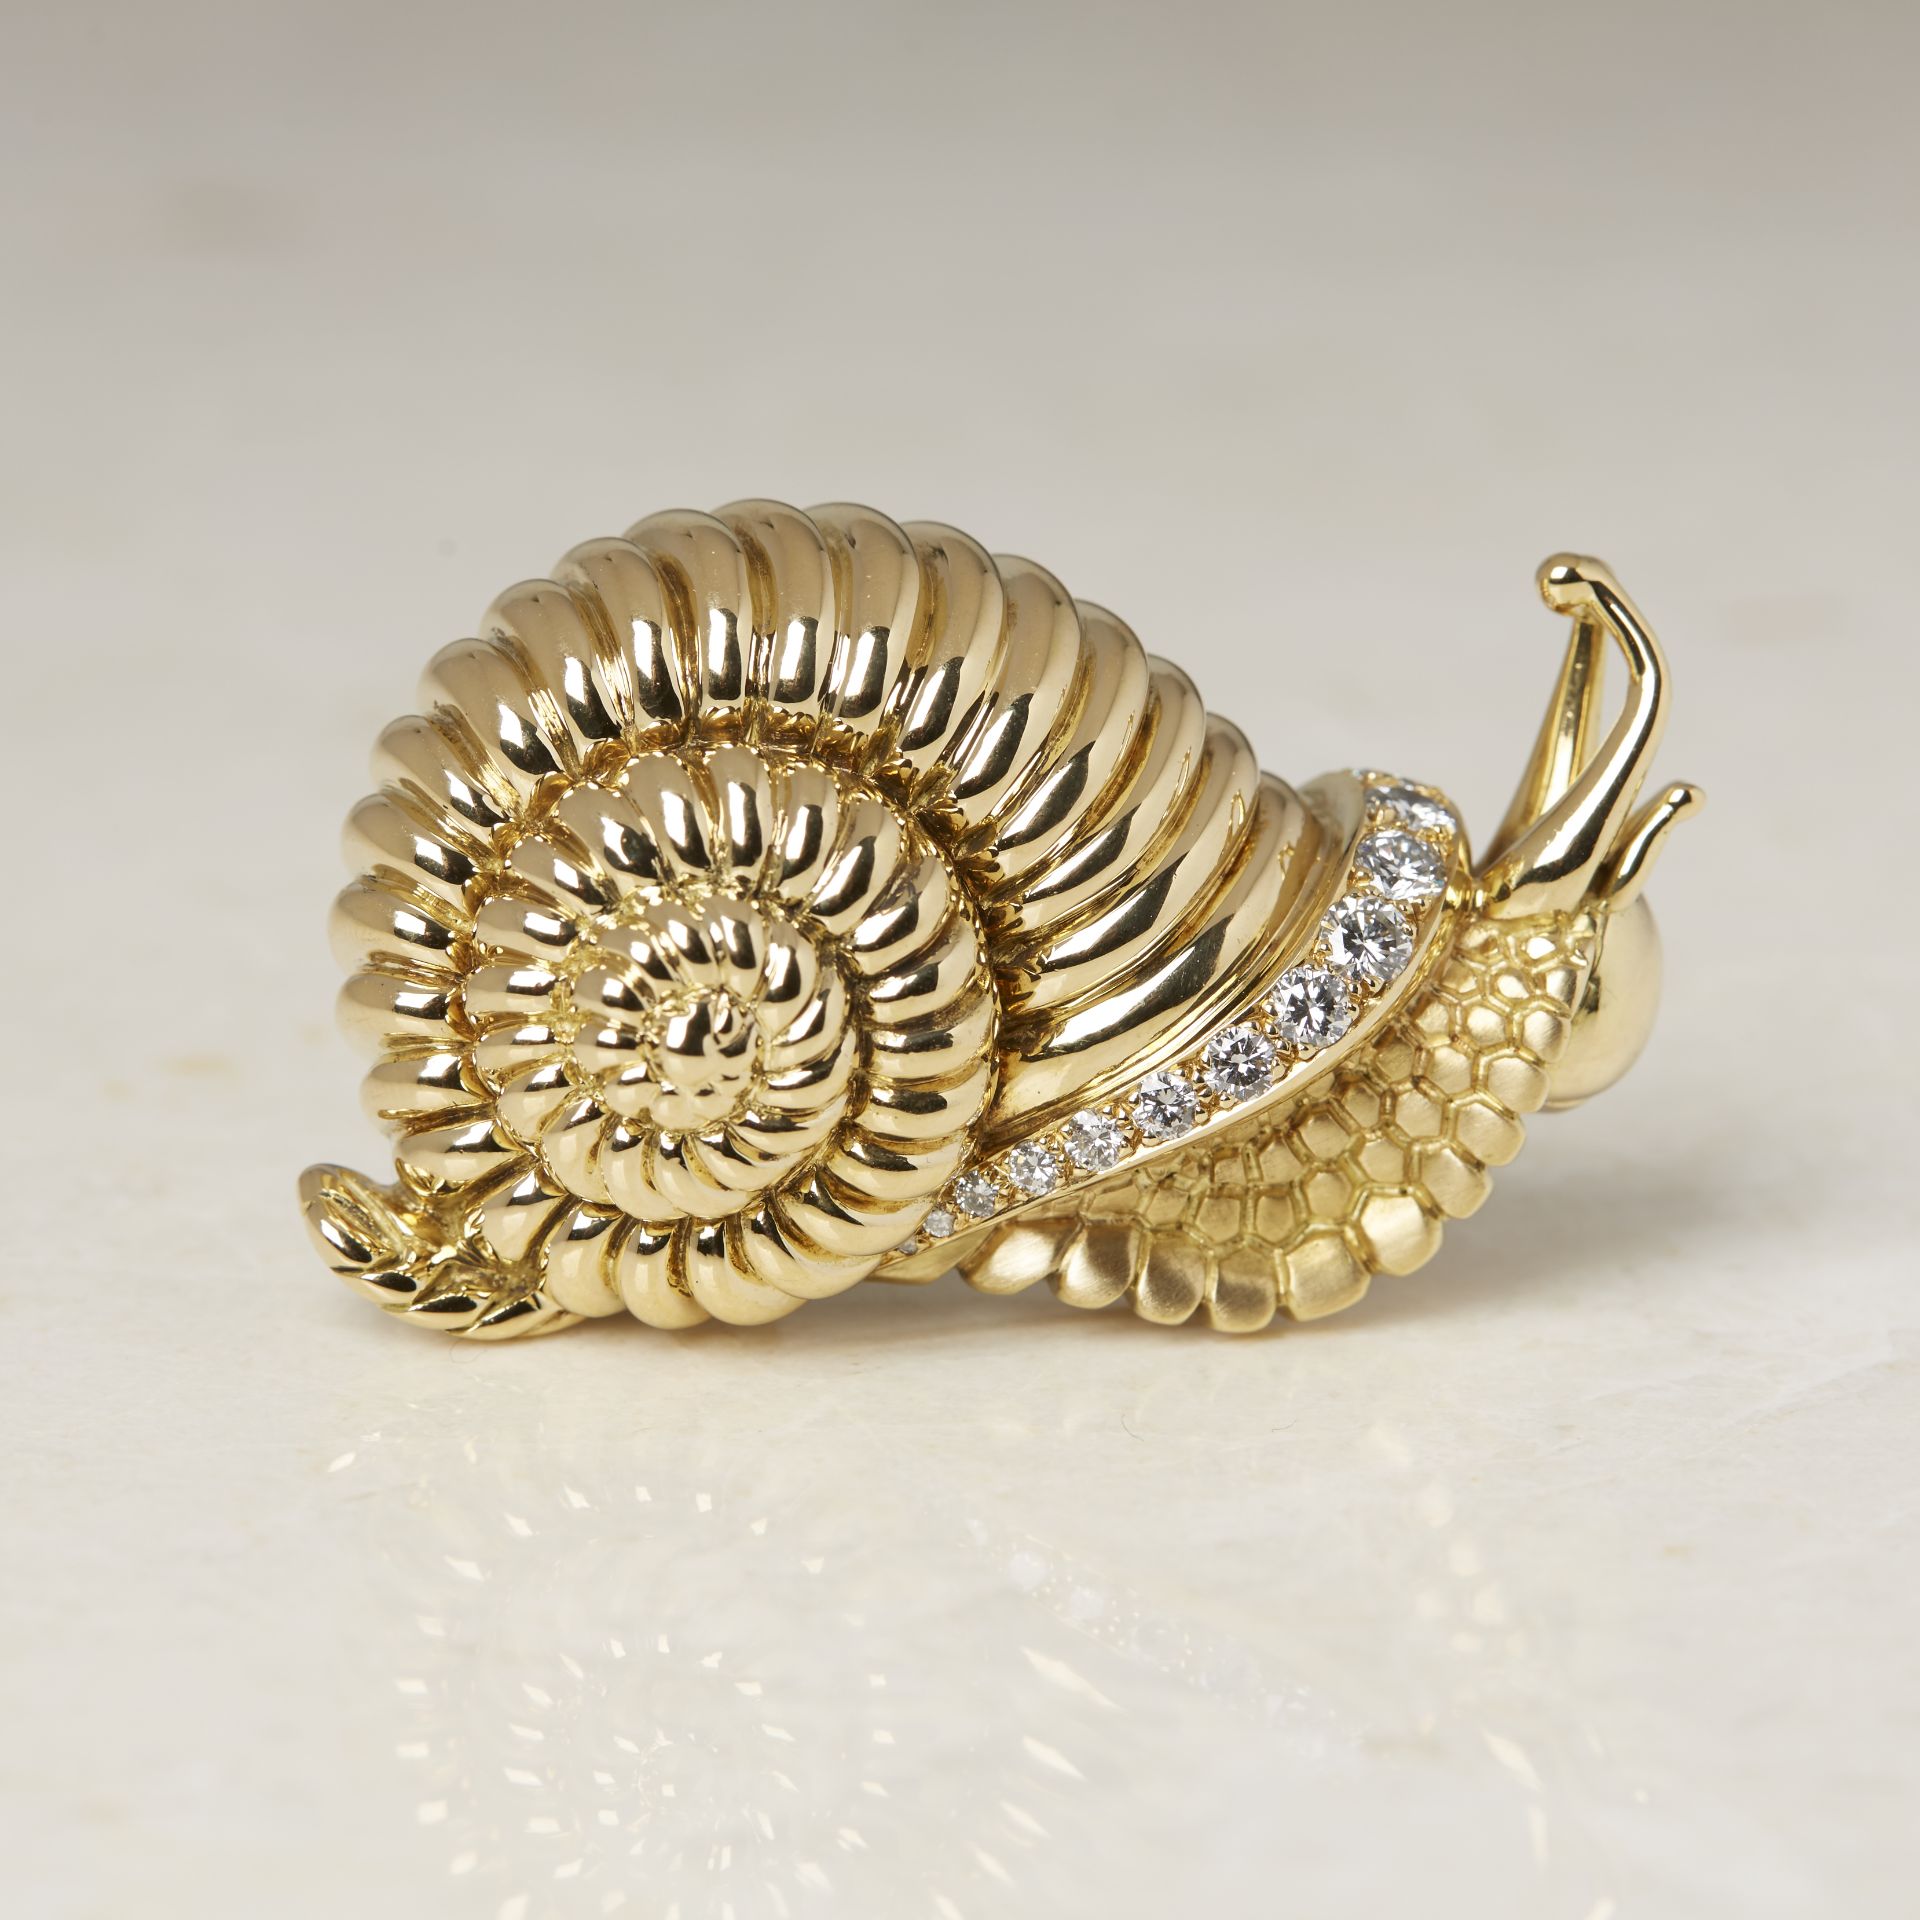 Rene Boivin 18k Yellow Gold Diamond Snail Brooch with Presentation Box - Image 3 of 19